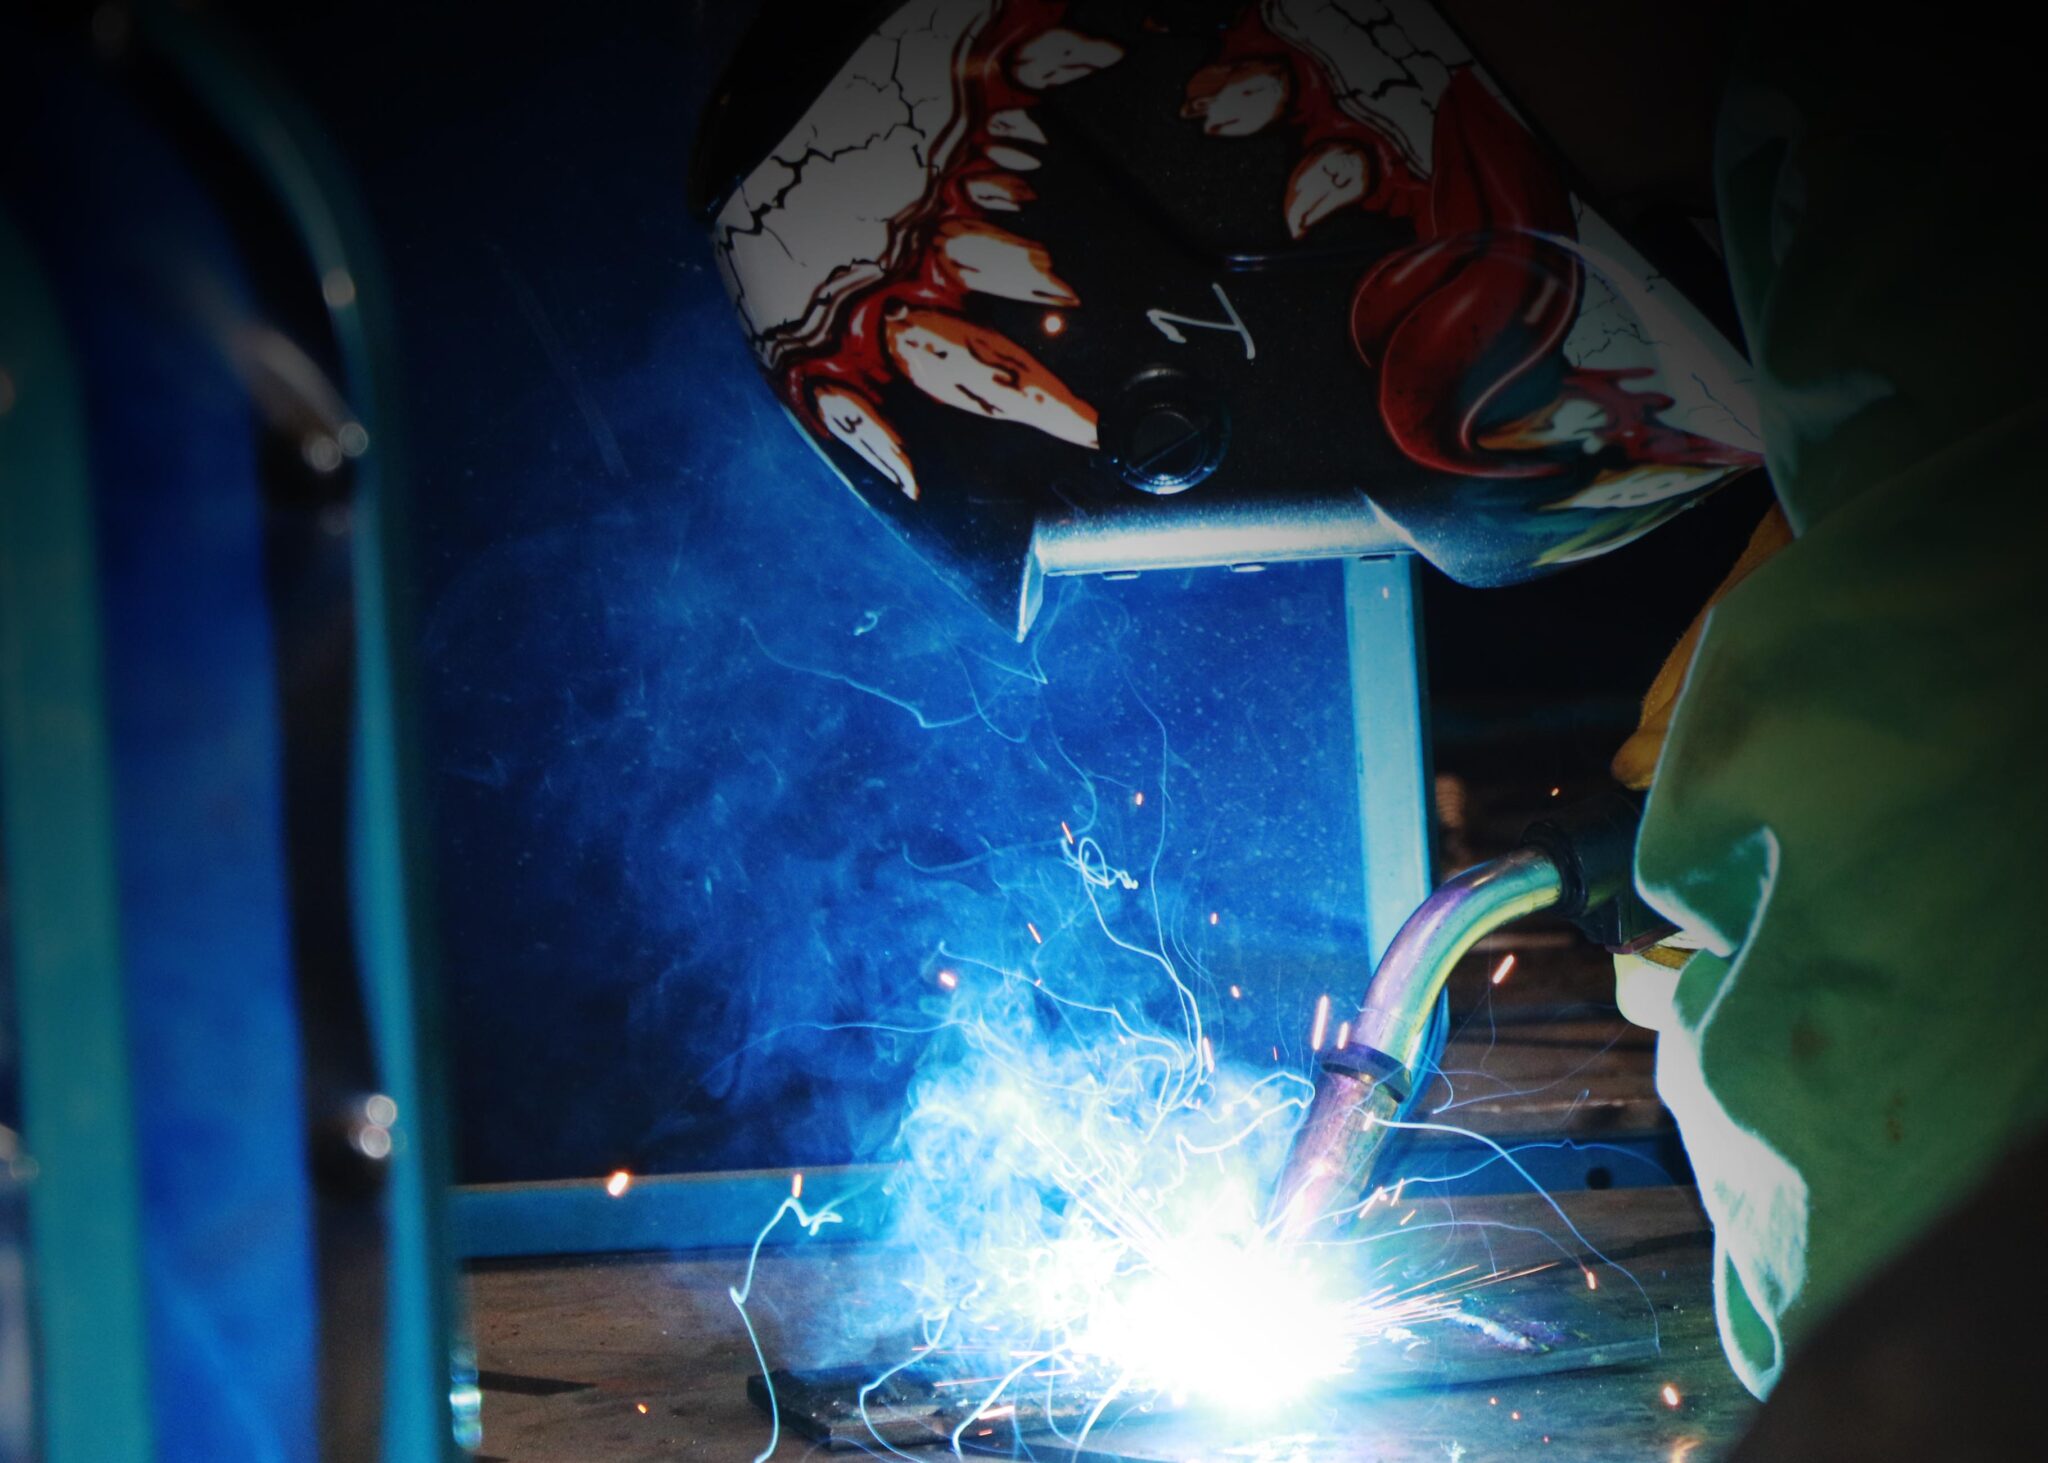 A welder works in a blue light.